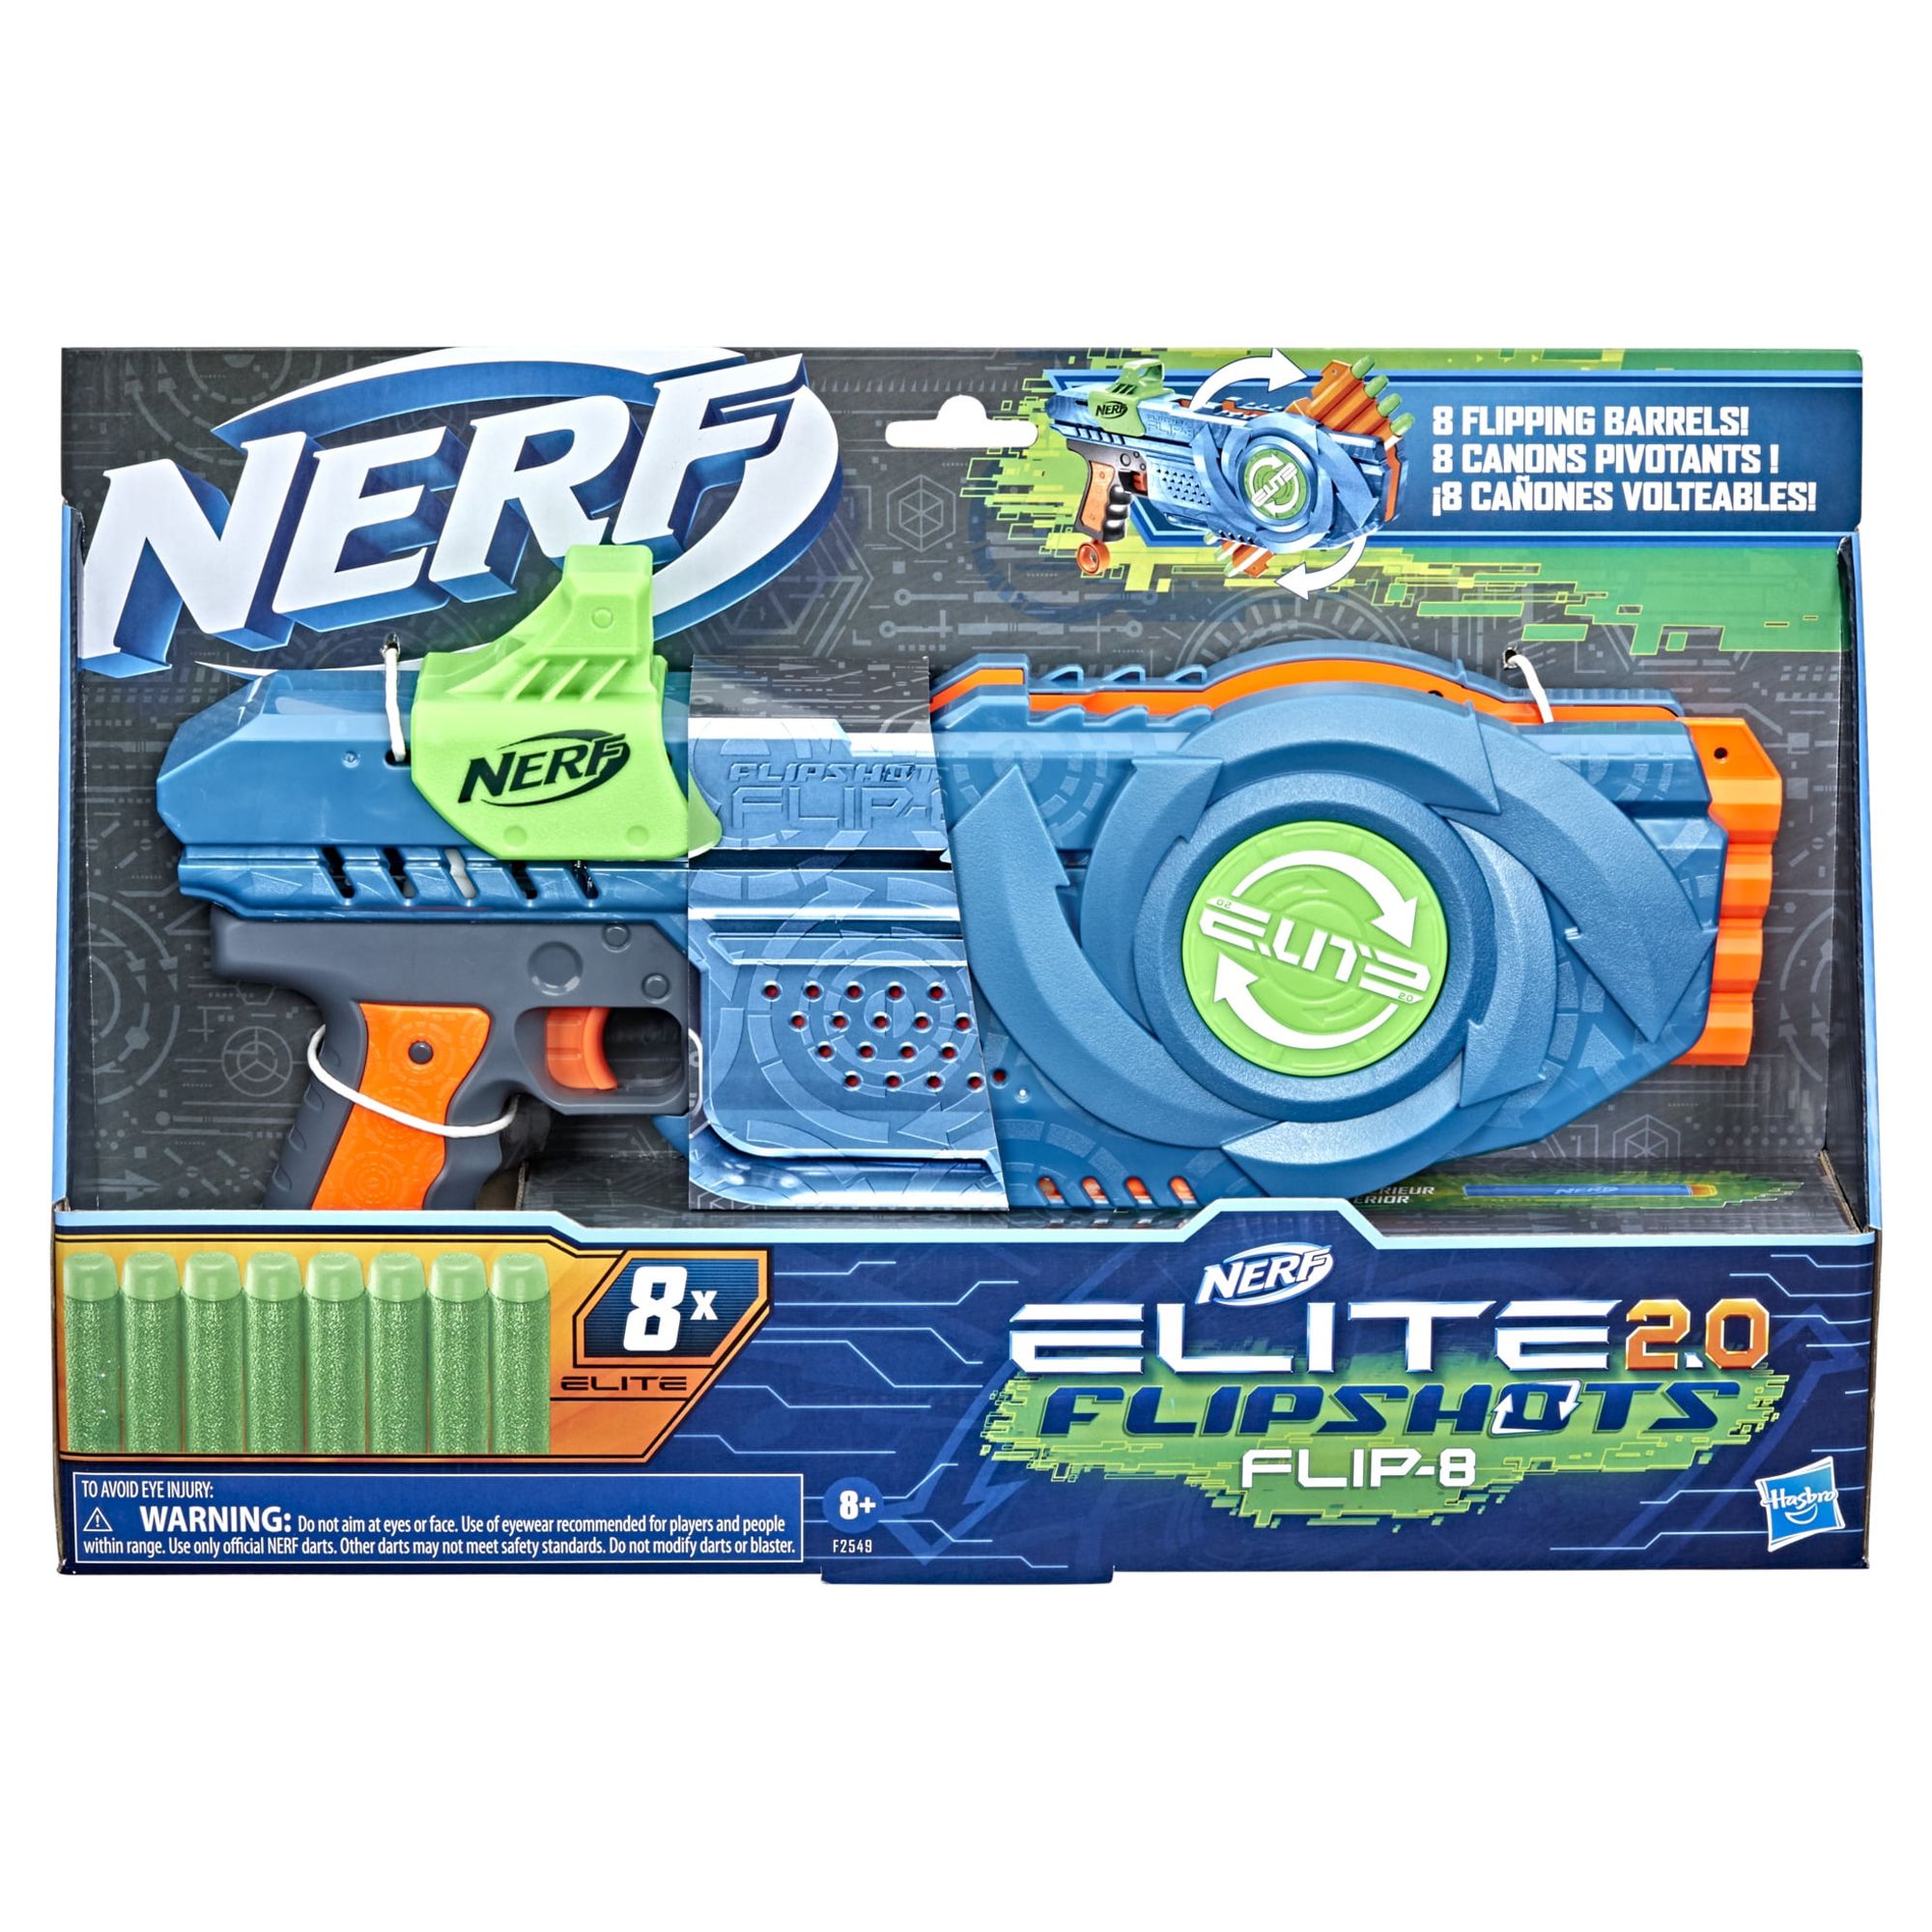 Nerf Elite 2.0 Flipshots Flip-8 Blaster, 8 Dart Barrels, Includes 8 Nerf Darts - image 6 of 6